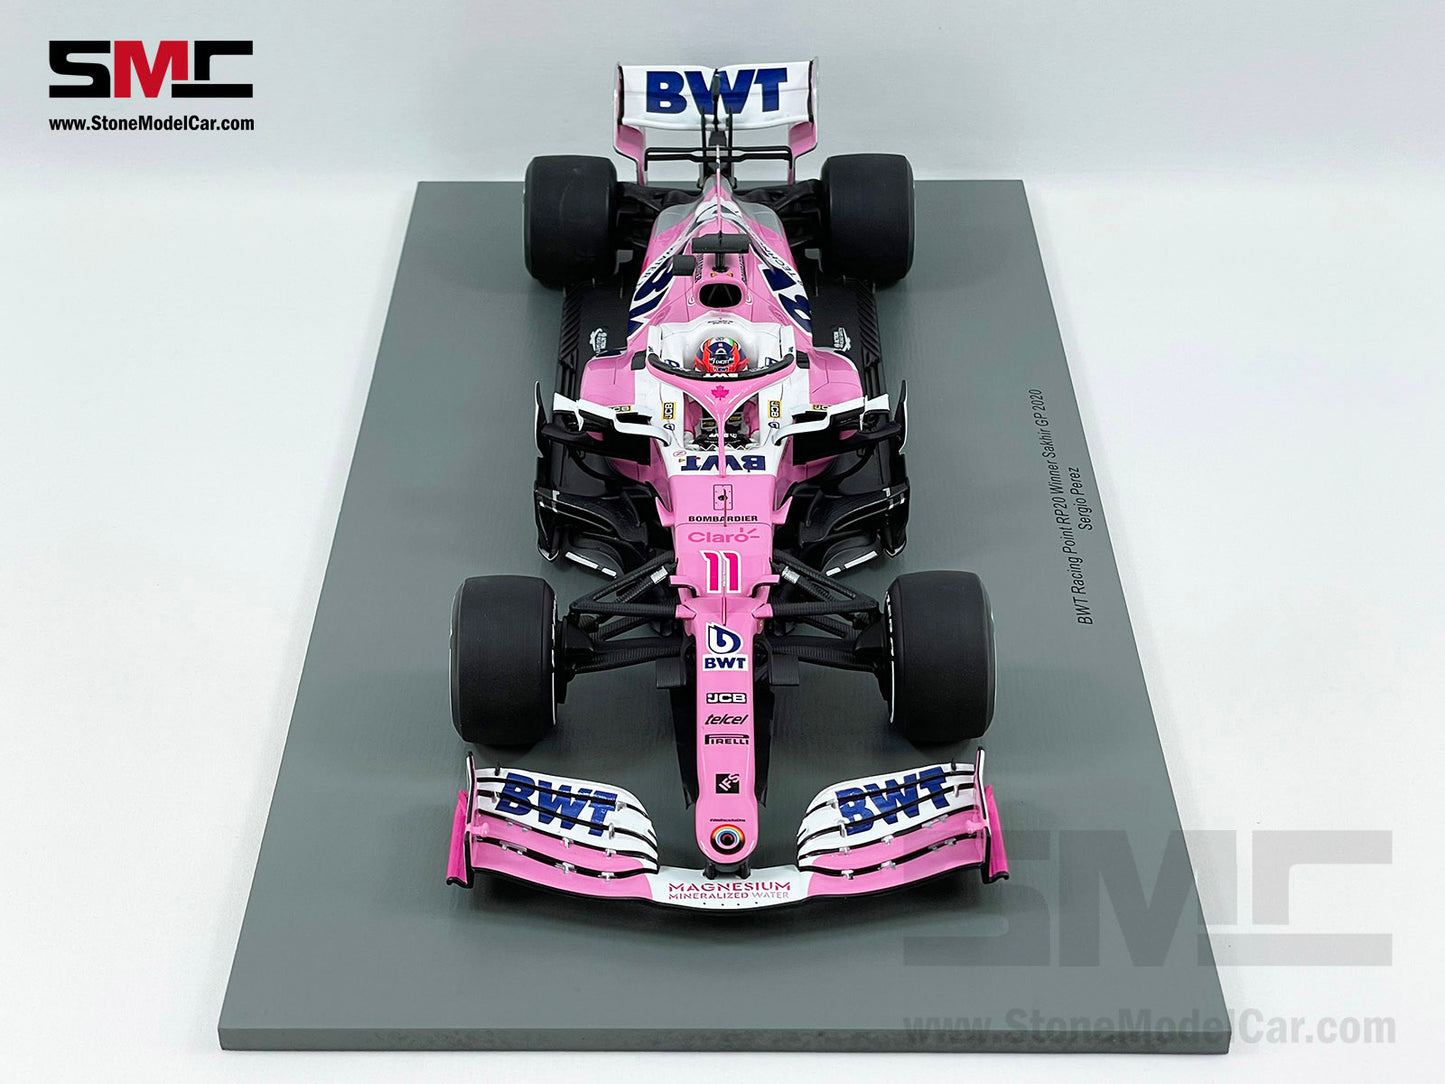 BWT Racing Point RP20 # 11 Sergio Perez Sakhir GP 2020 1st Win of F1 1:18 Spark